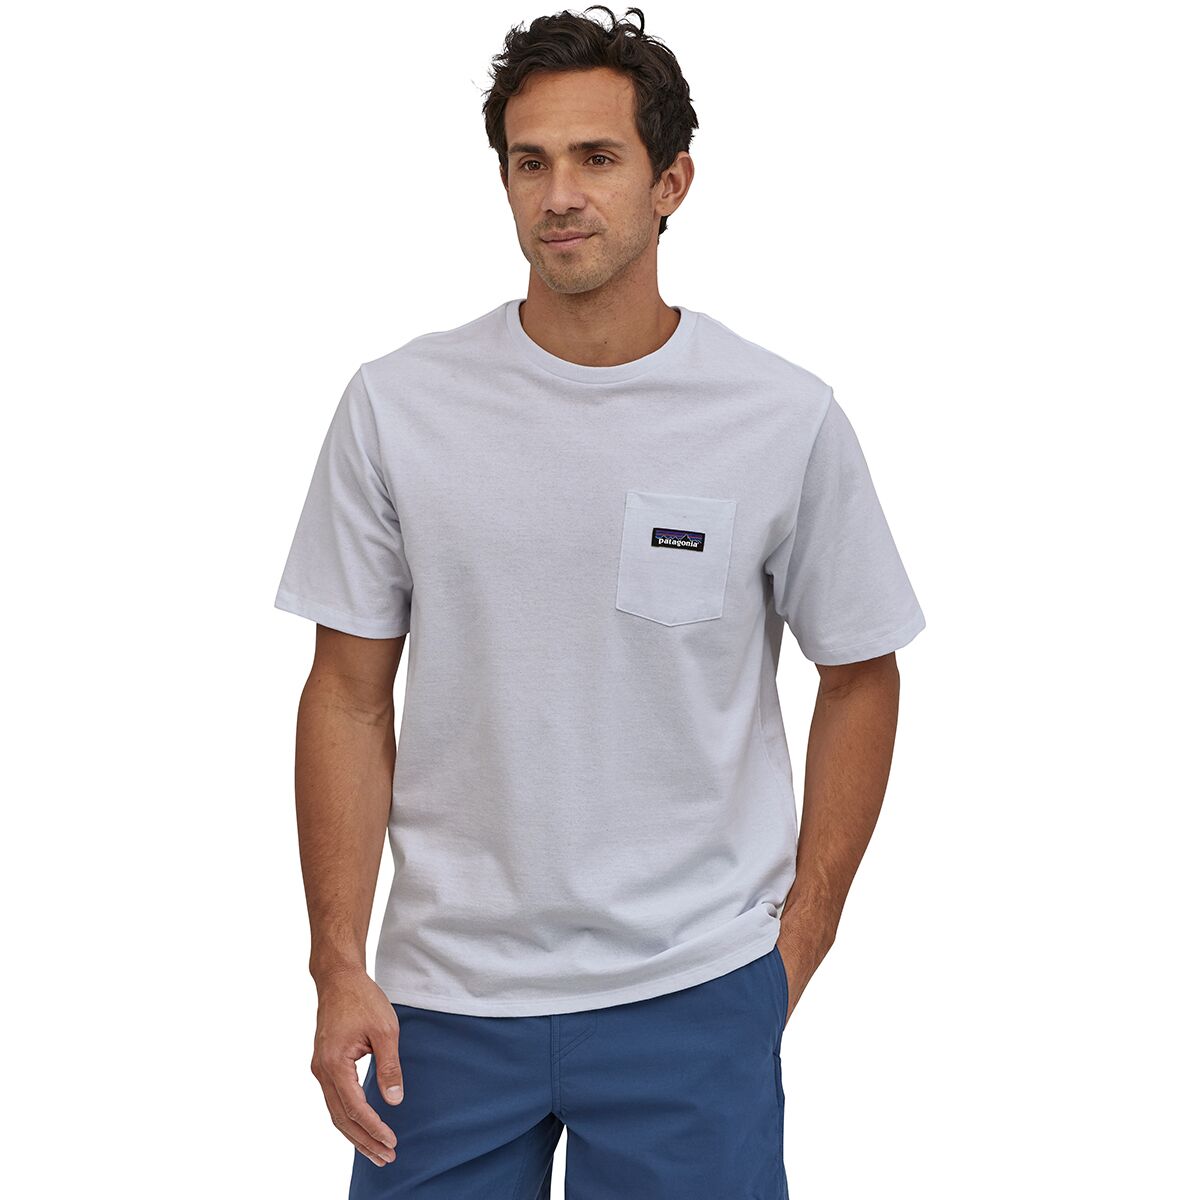 Patagonia P-6 Label Pocket Responsibili-T-Shirt - Men's